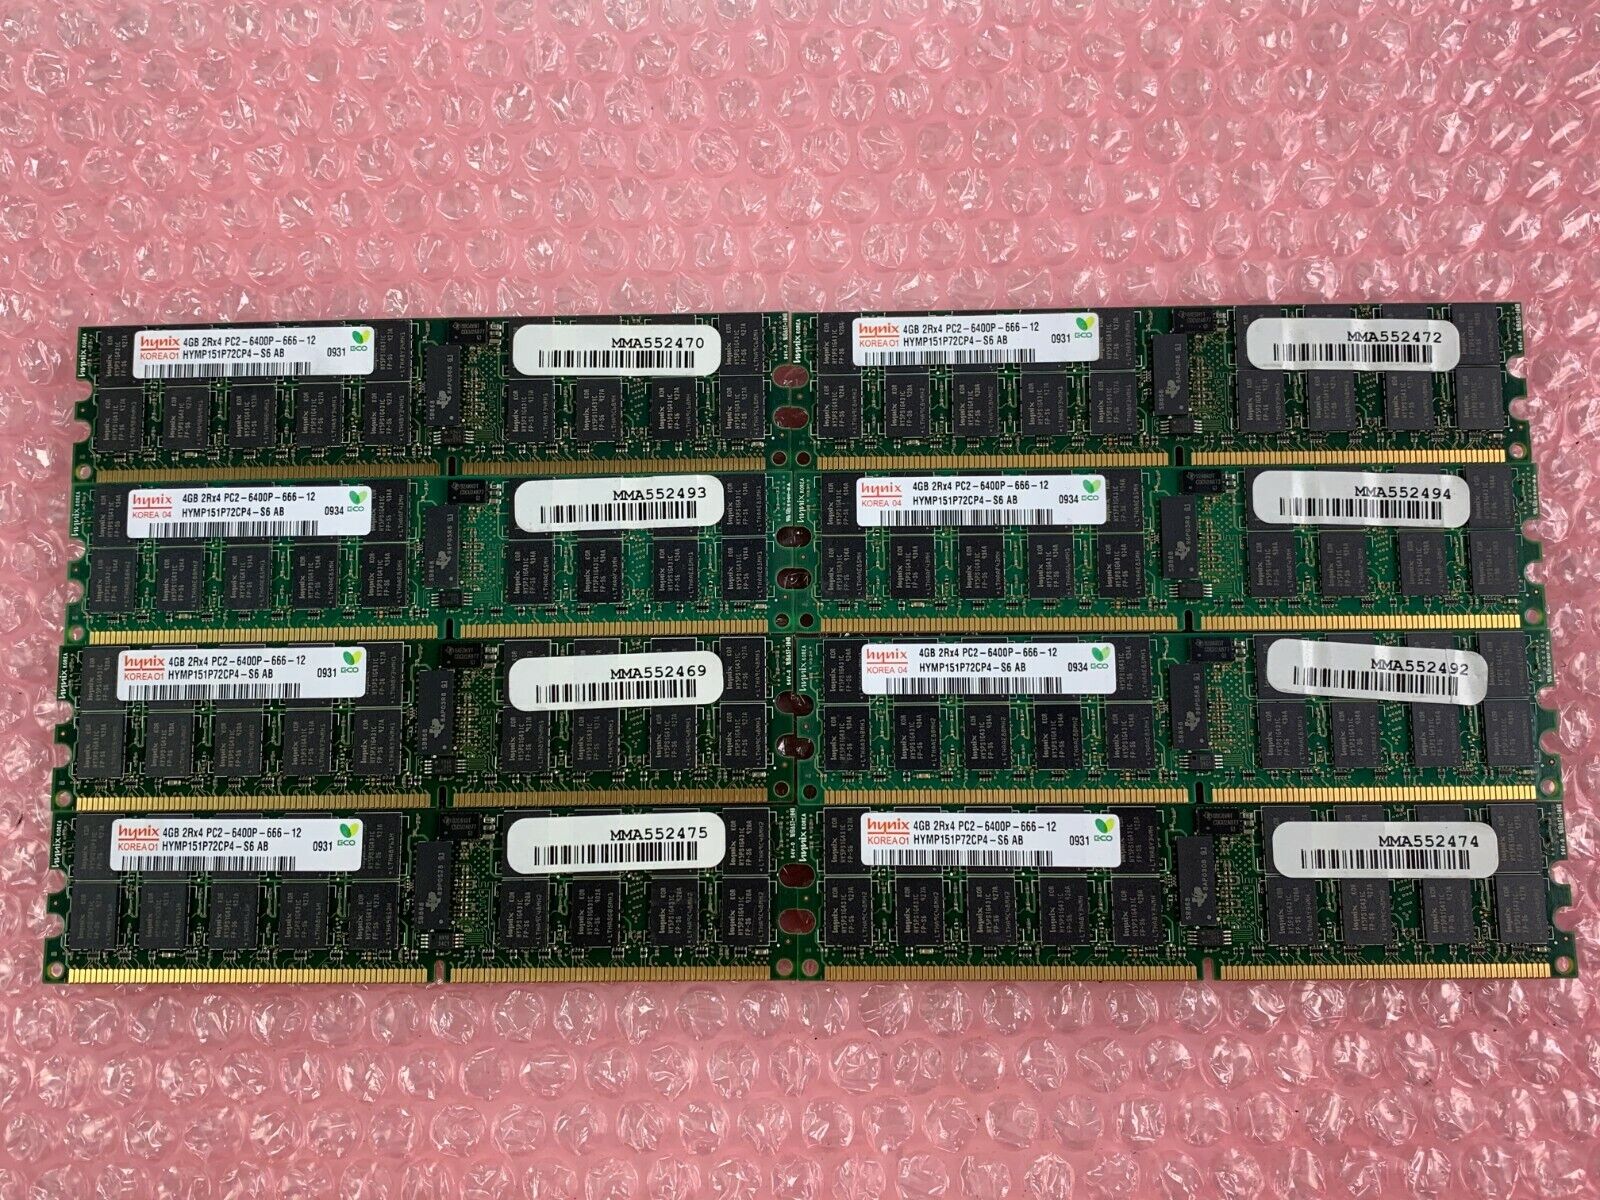 32GB Hynix 8x 4GB PC2-6400P-666-12 HYMP151P72CP4-S6 Server RAM Memory